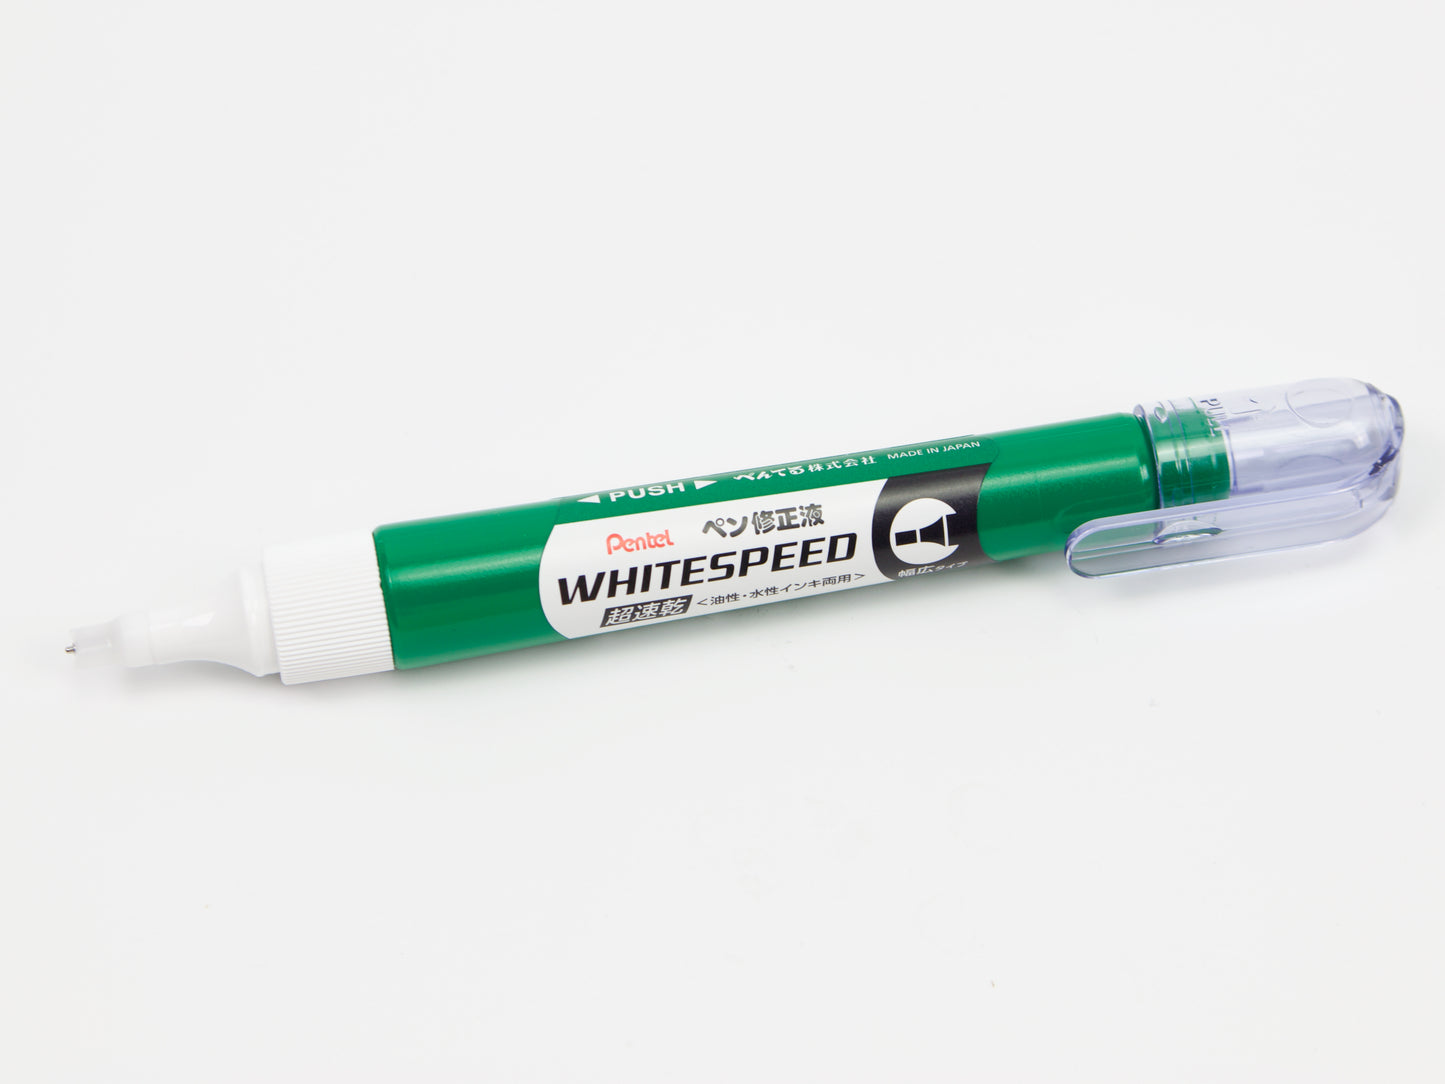 Whitespeed Correction Pen